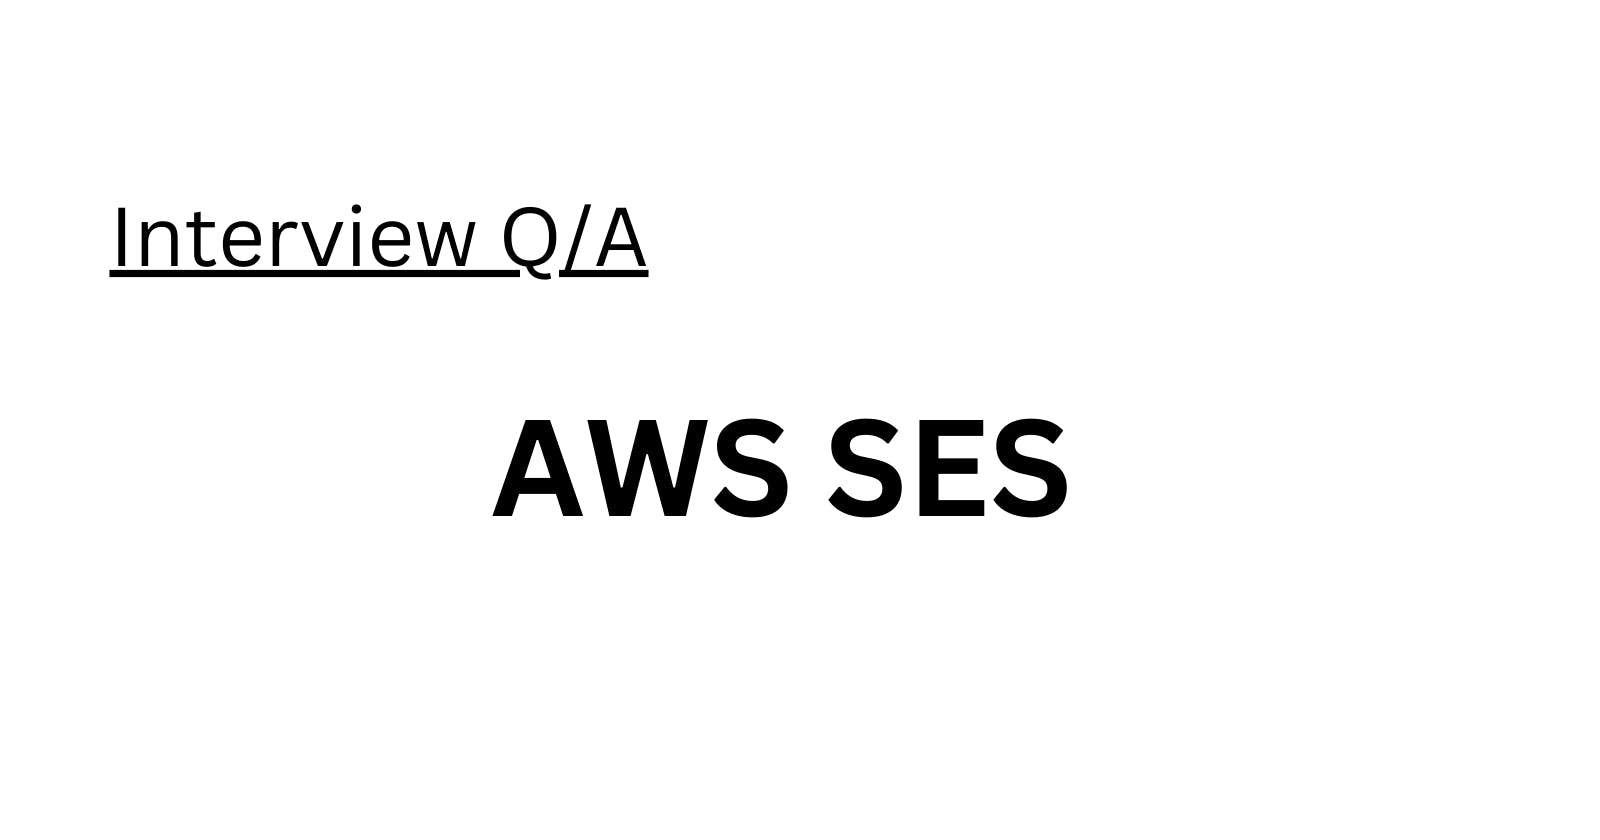 AWS SES Interview Q/A